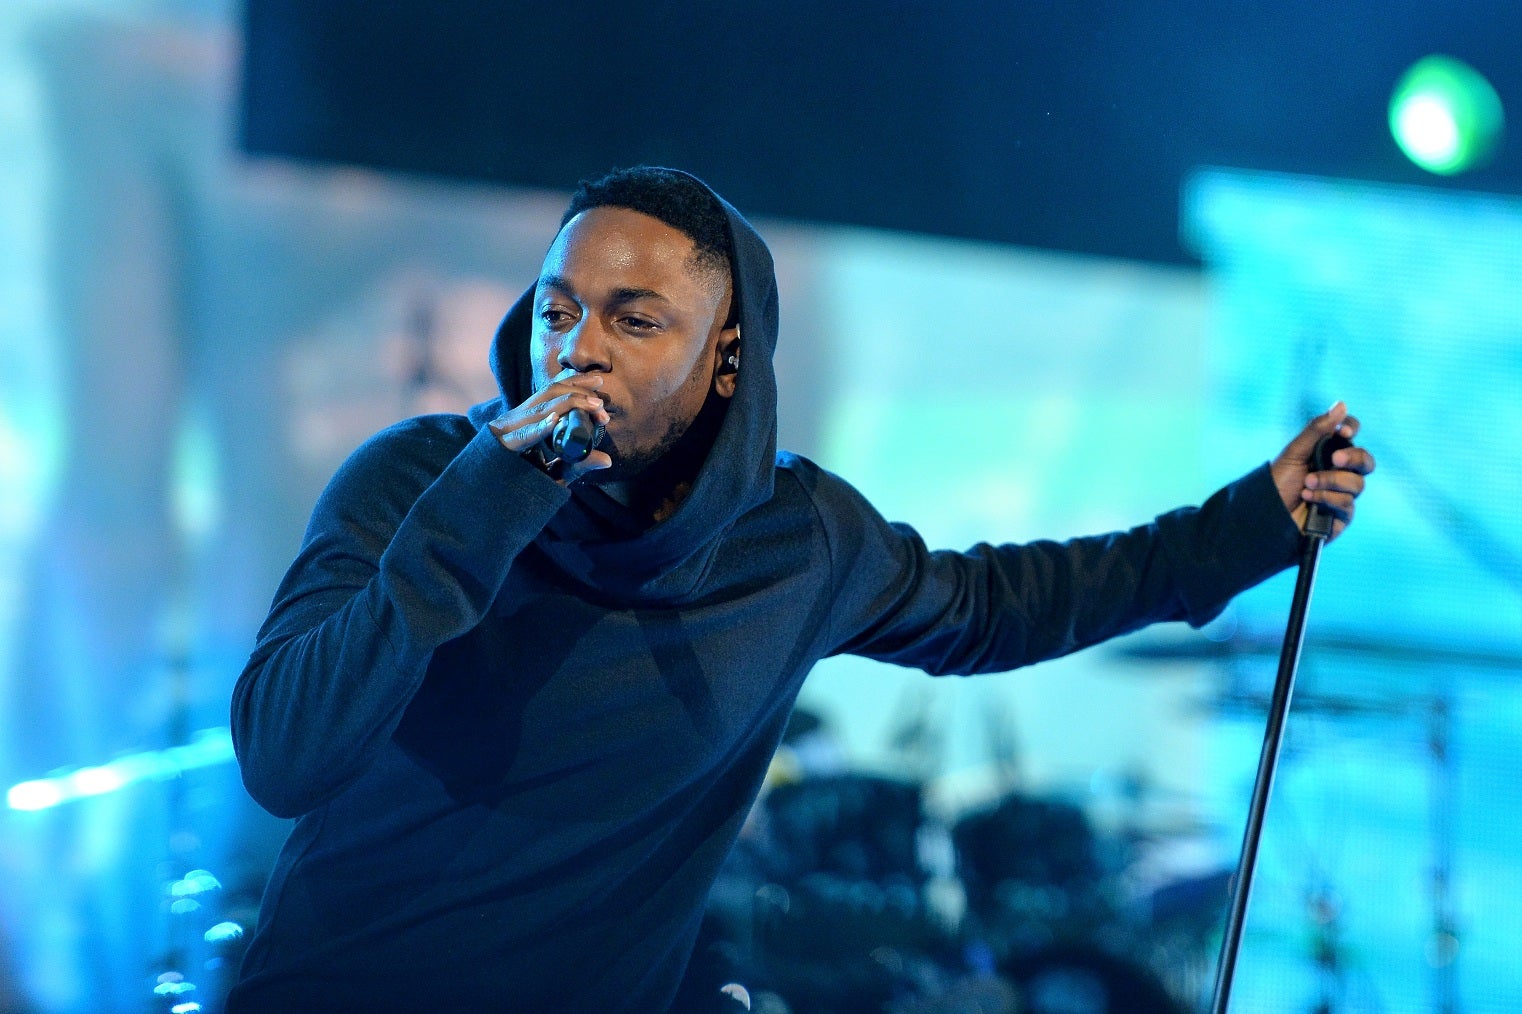 Rapper and singer Kendrick Lamar